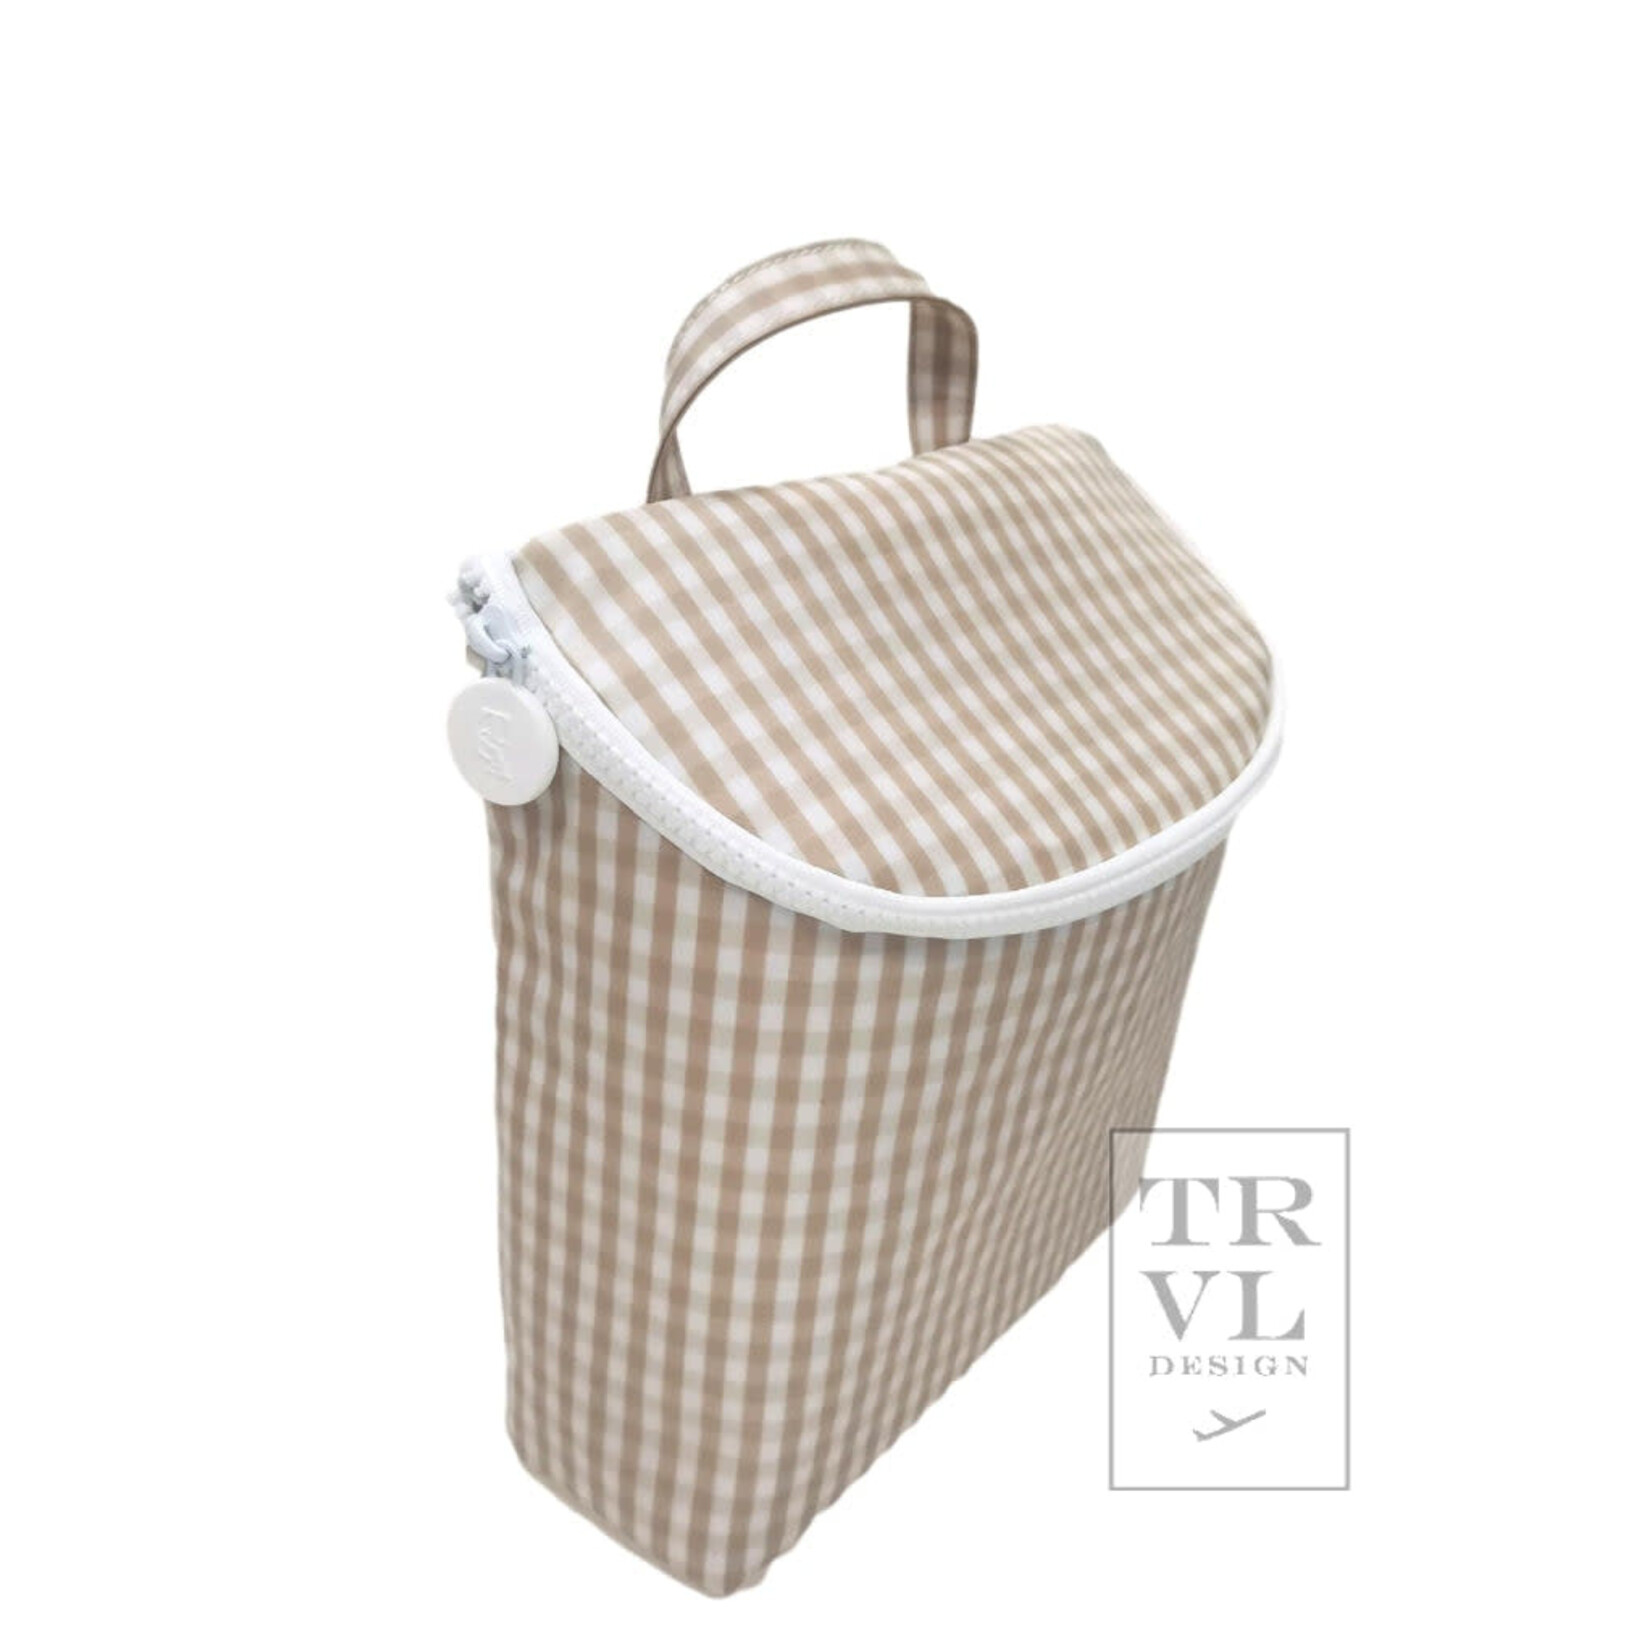 TRVL Design Take Away Insulated Bag - Gingham Khaki